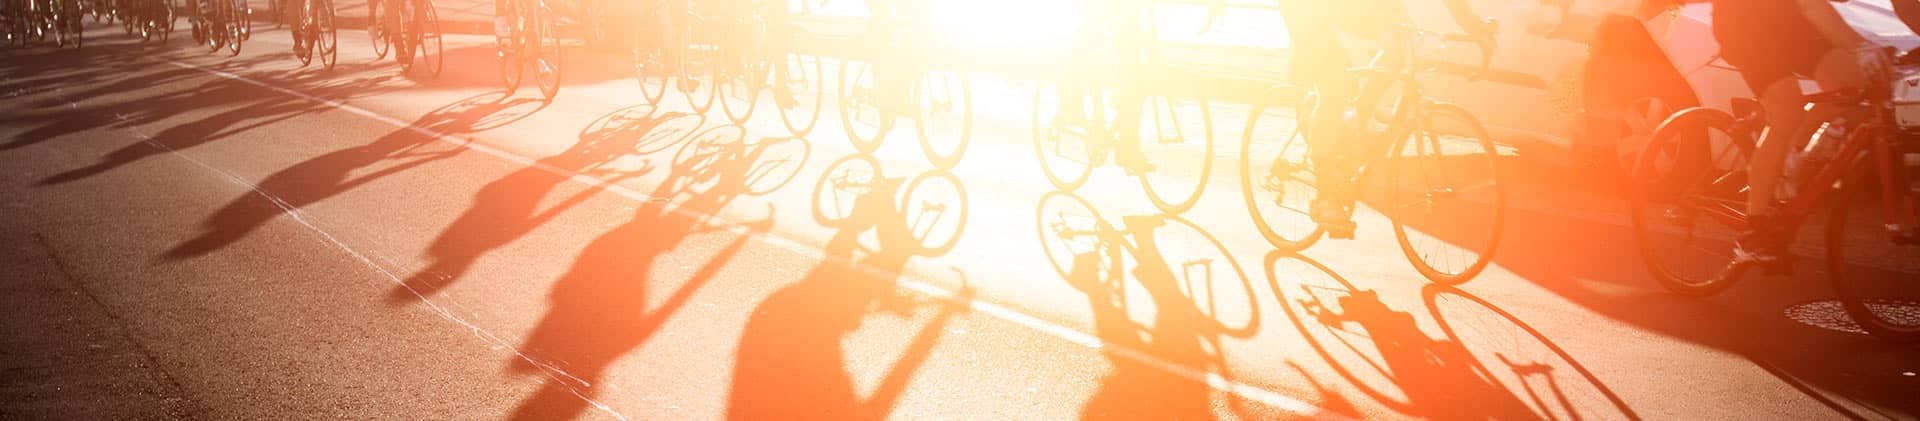 Bikes and shadows